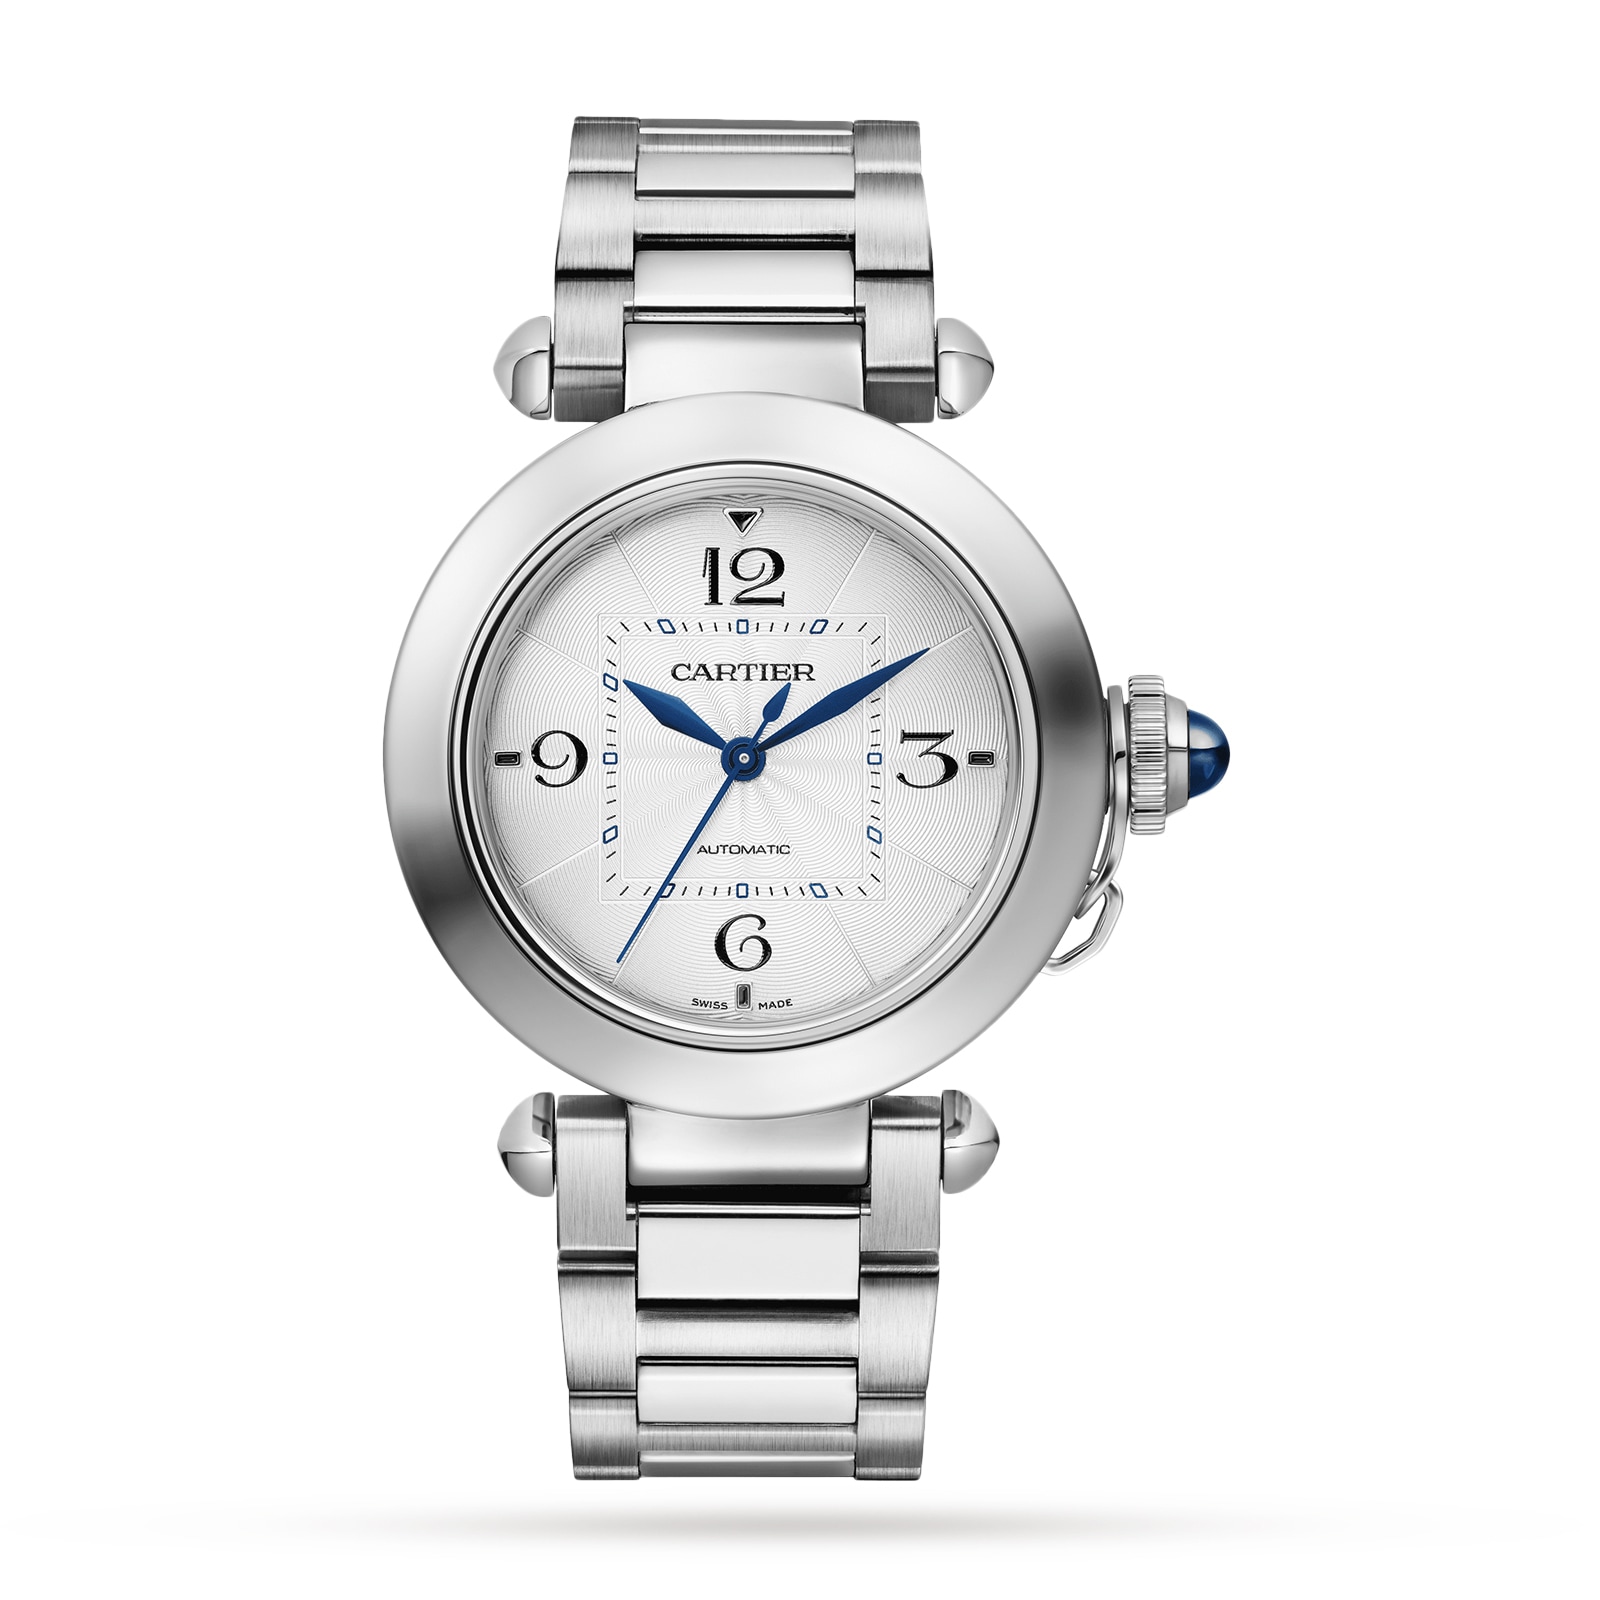 Is Cartier Watch A Good Investment | Cartier Watch Valuation